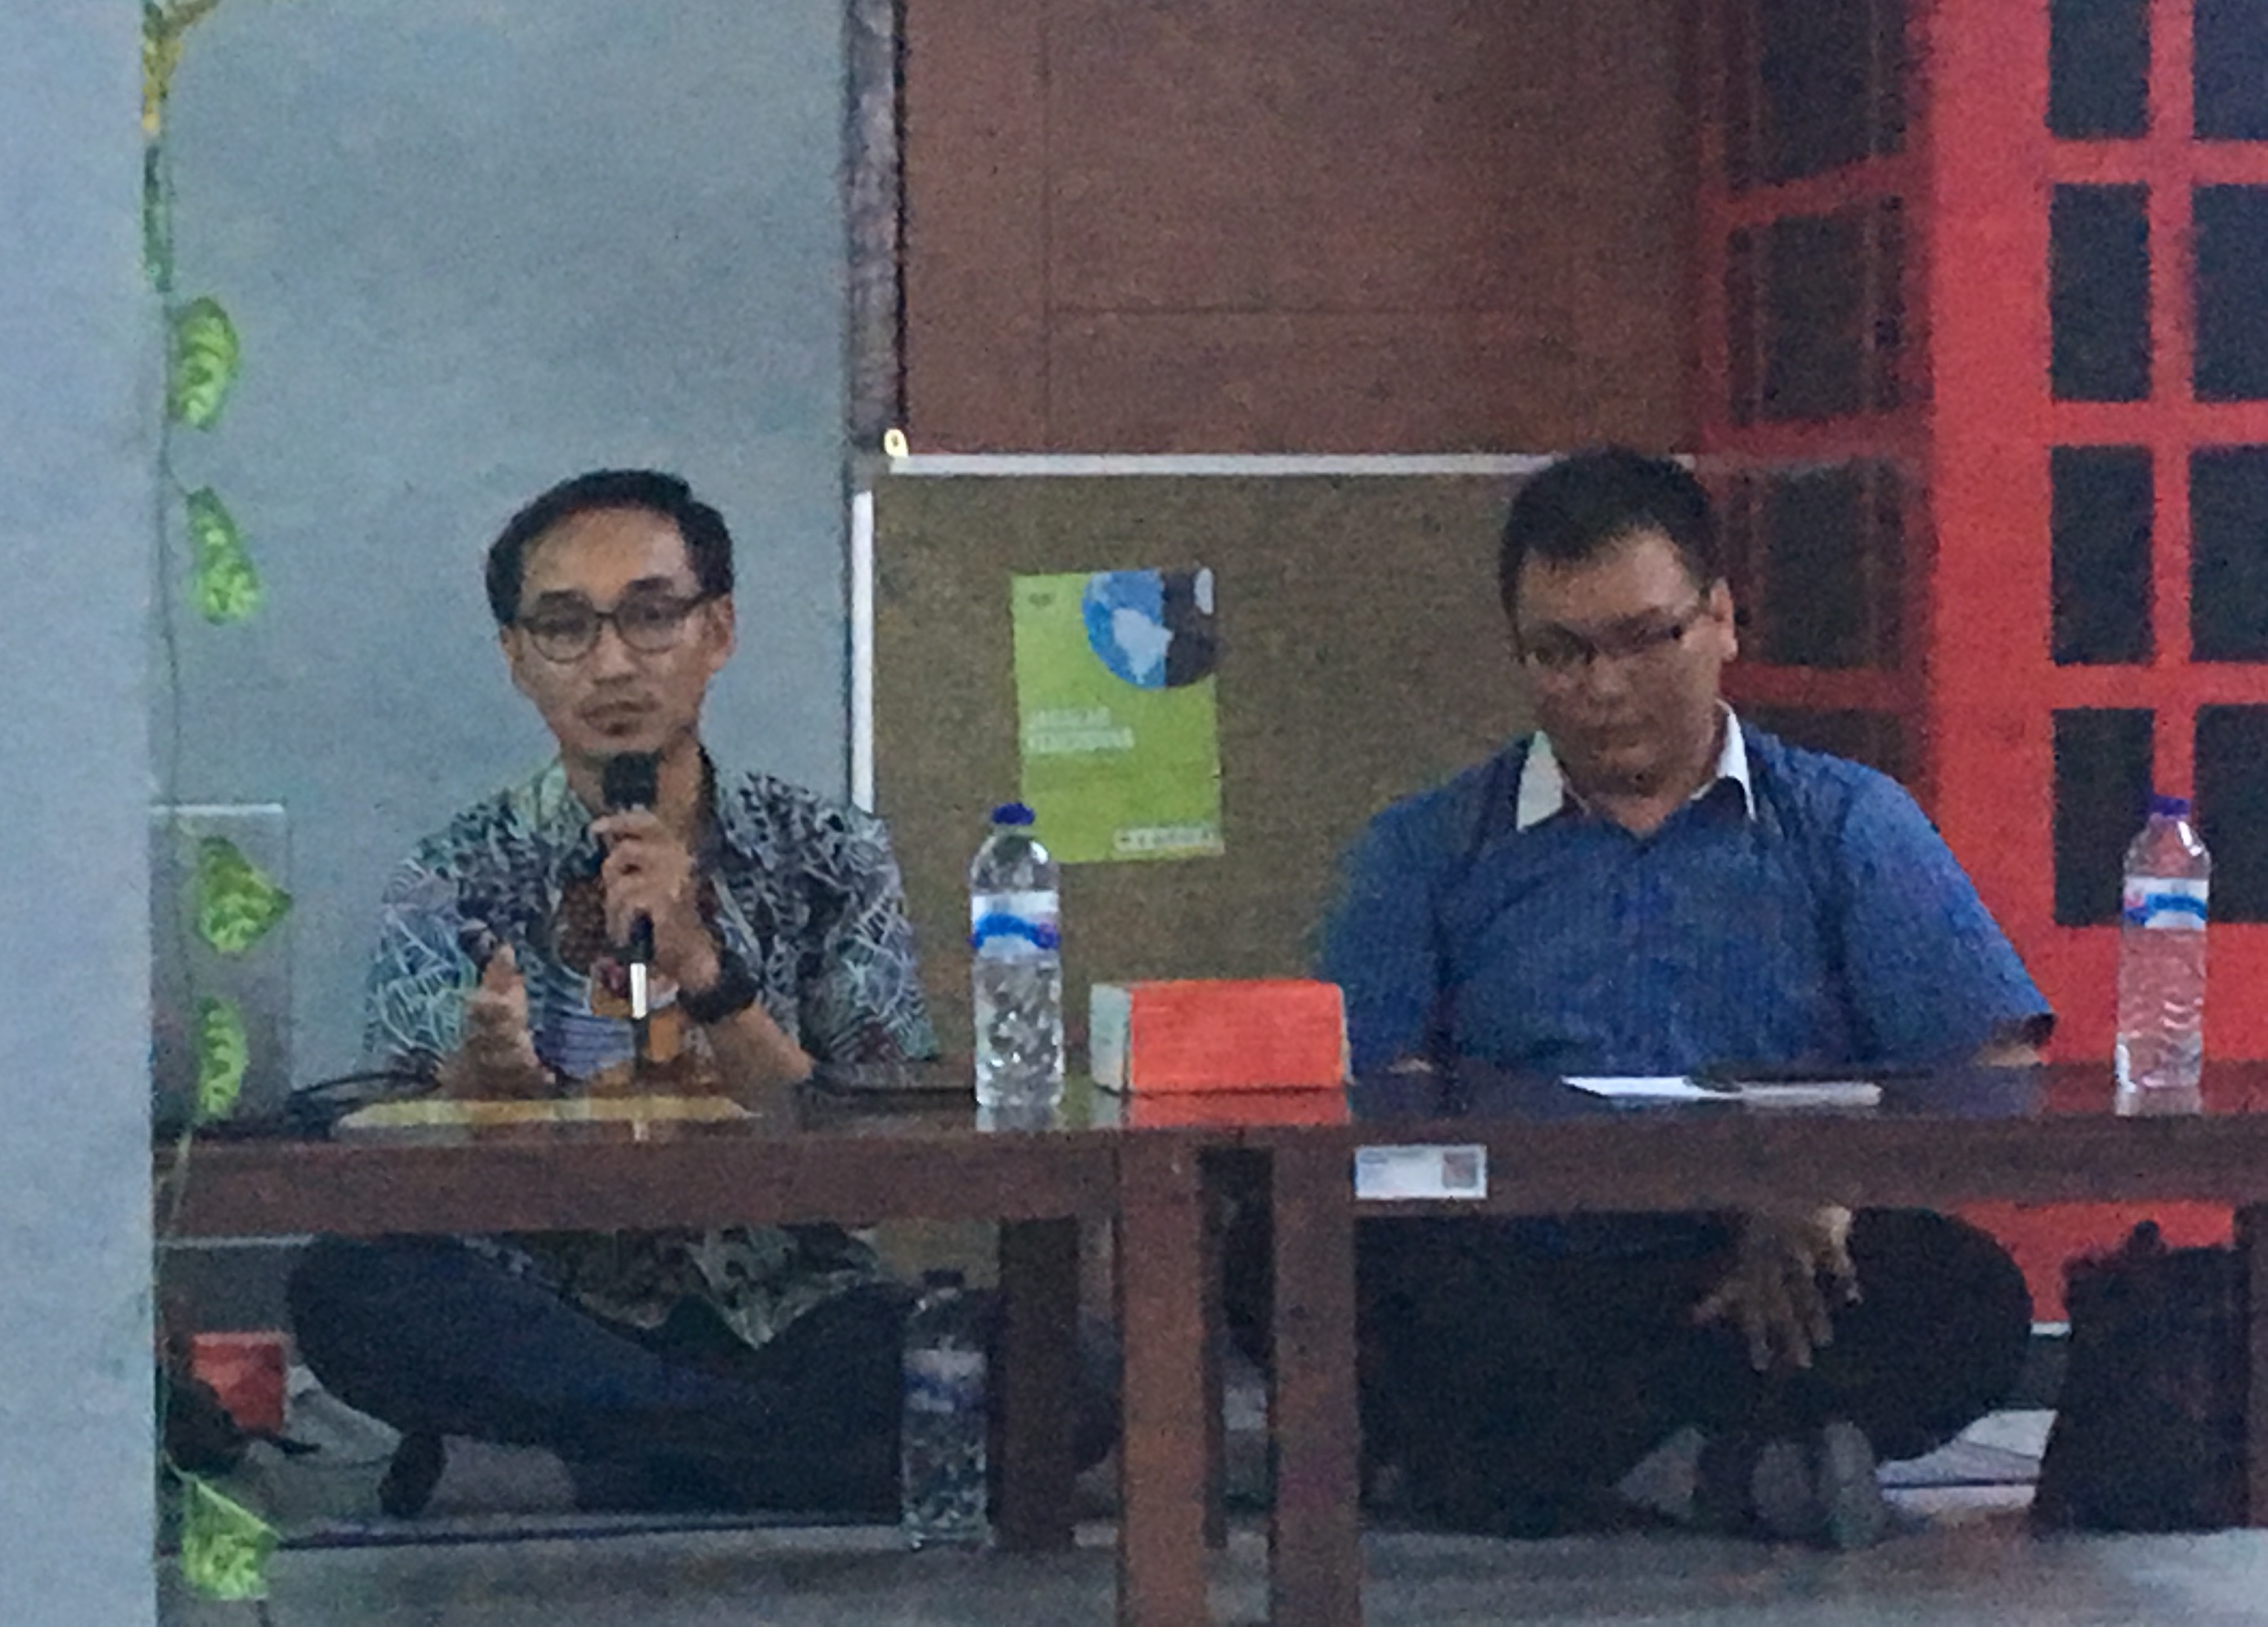 UNAIR FIB Lecturer Gesang Manggala Nugraha (left)